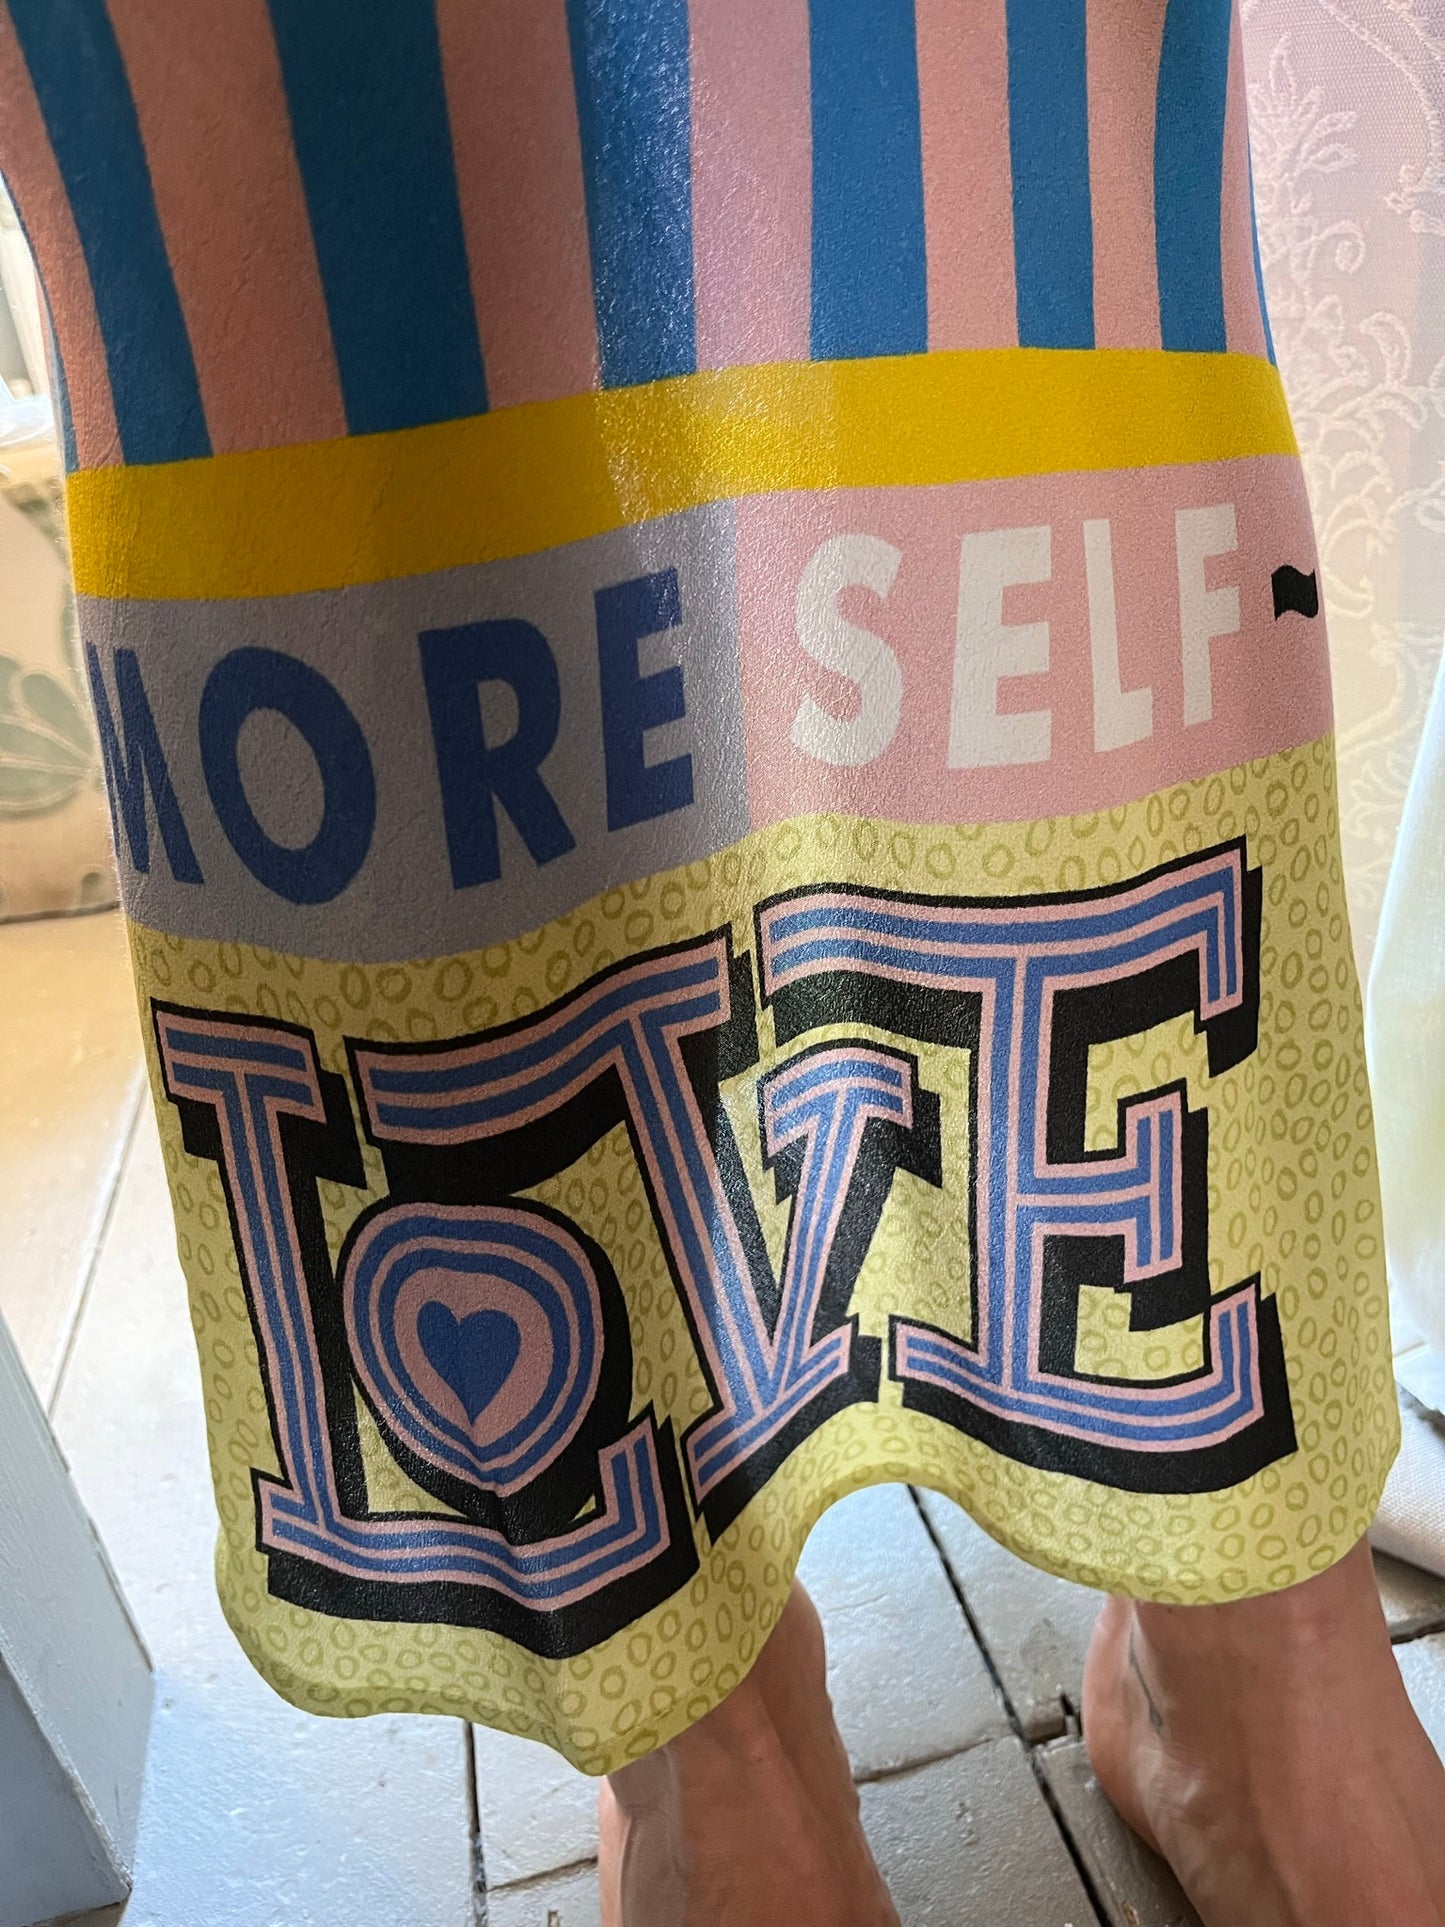 'More Self Love' dress